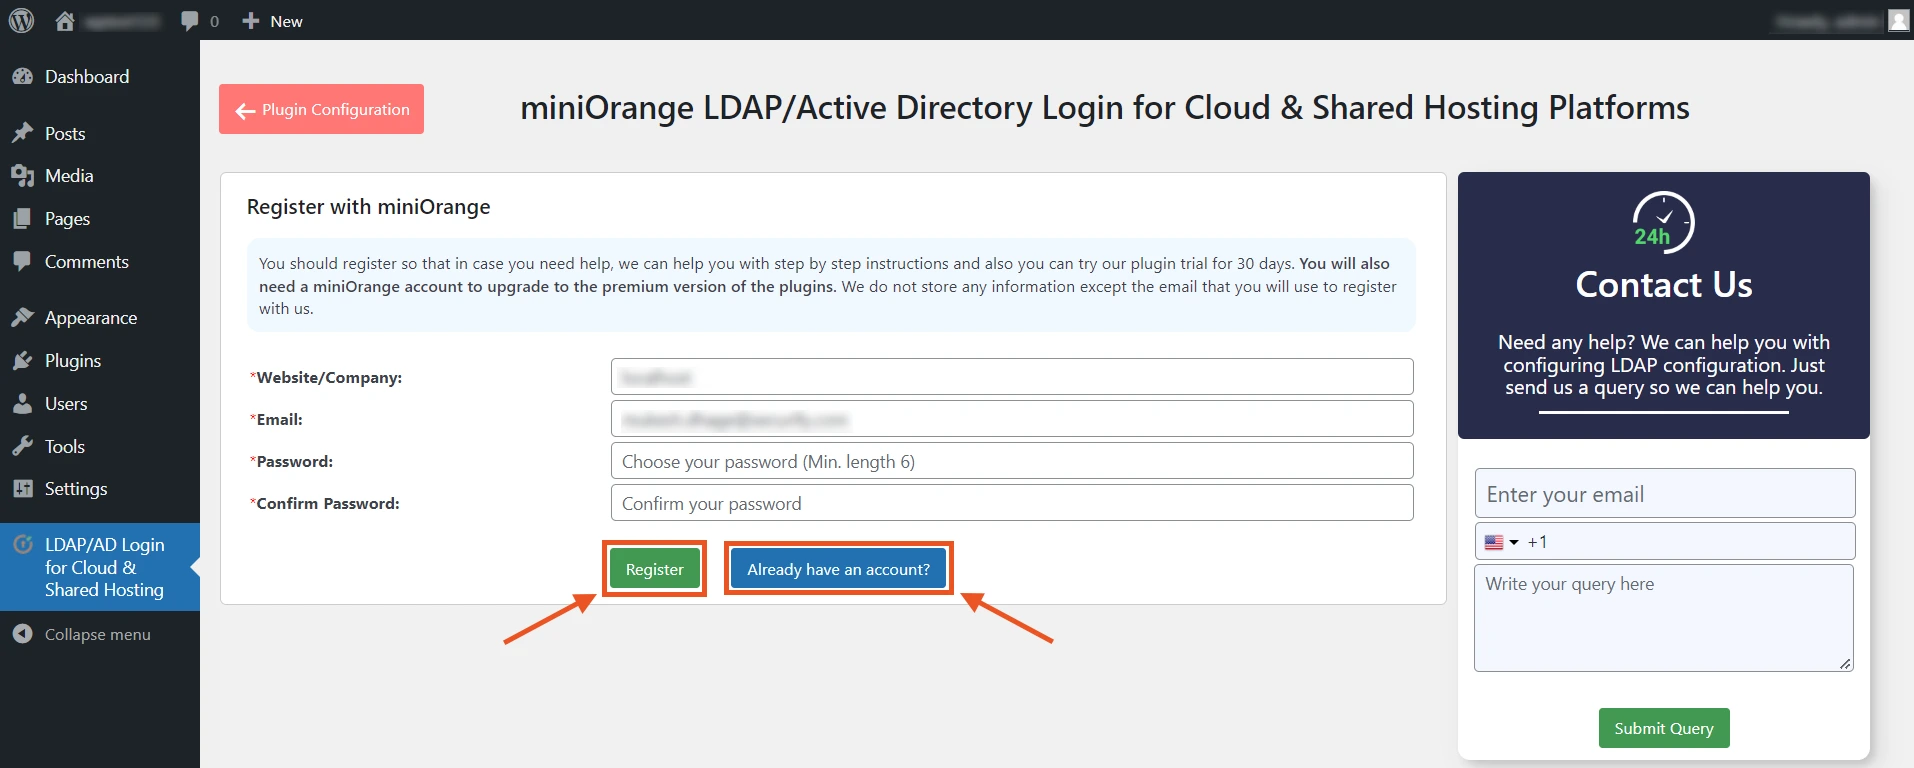 miniOrange login for LDAP Cloud active directory/LDAP integration for shared hosting environment plugin to configure